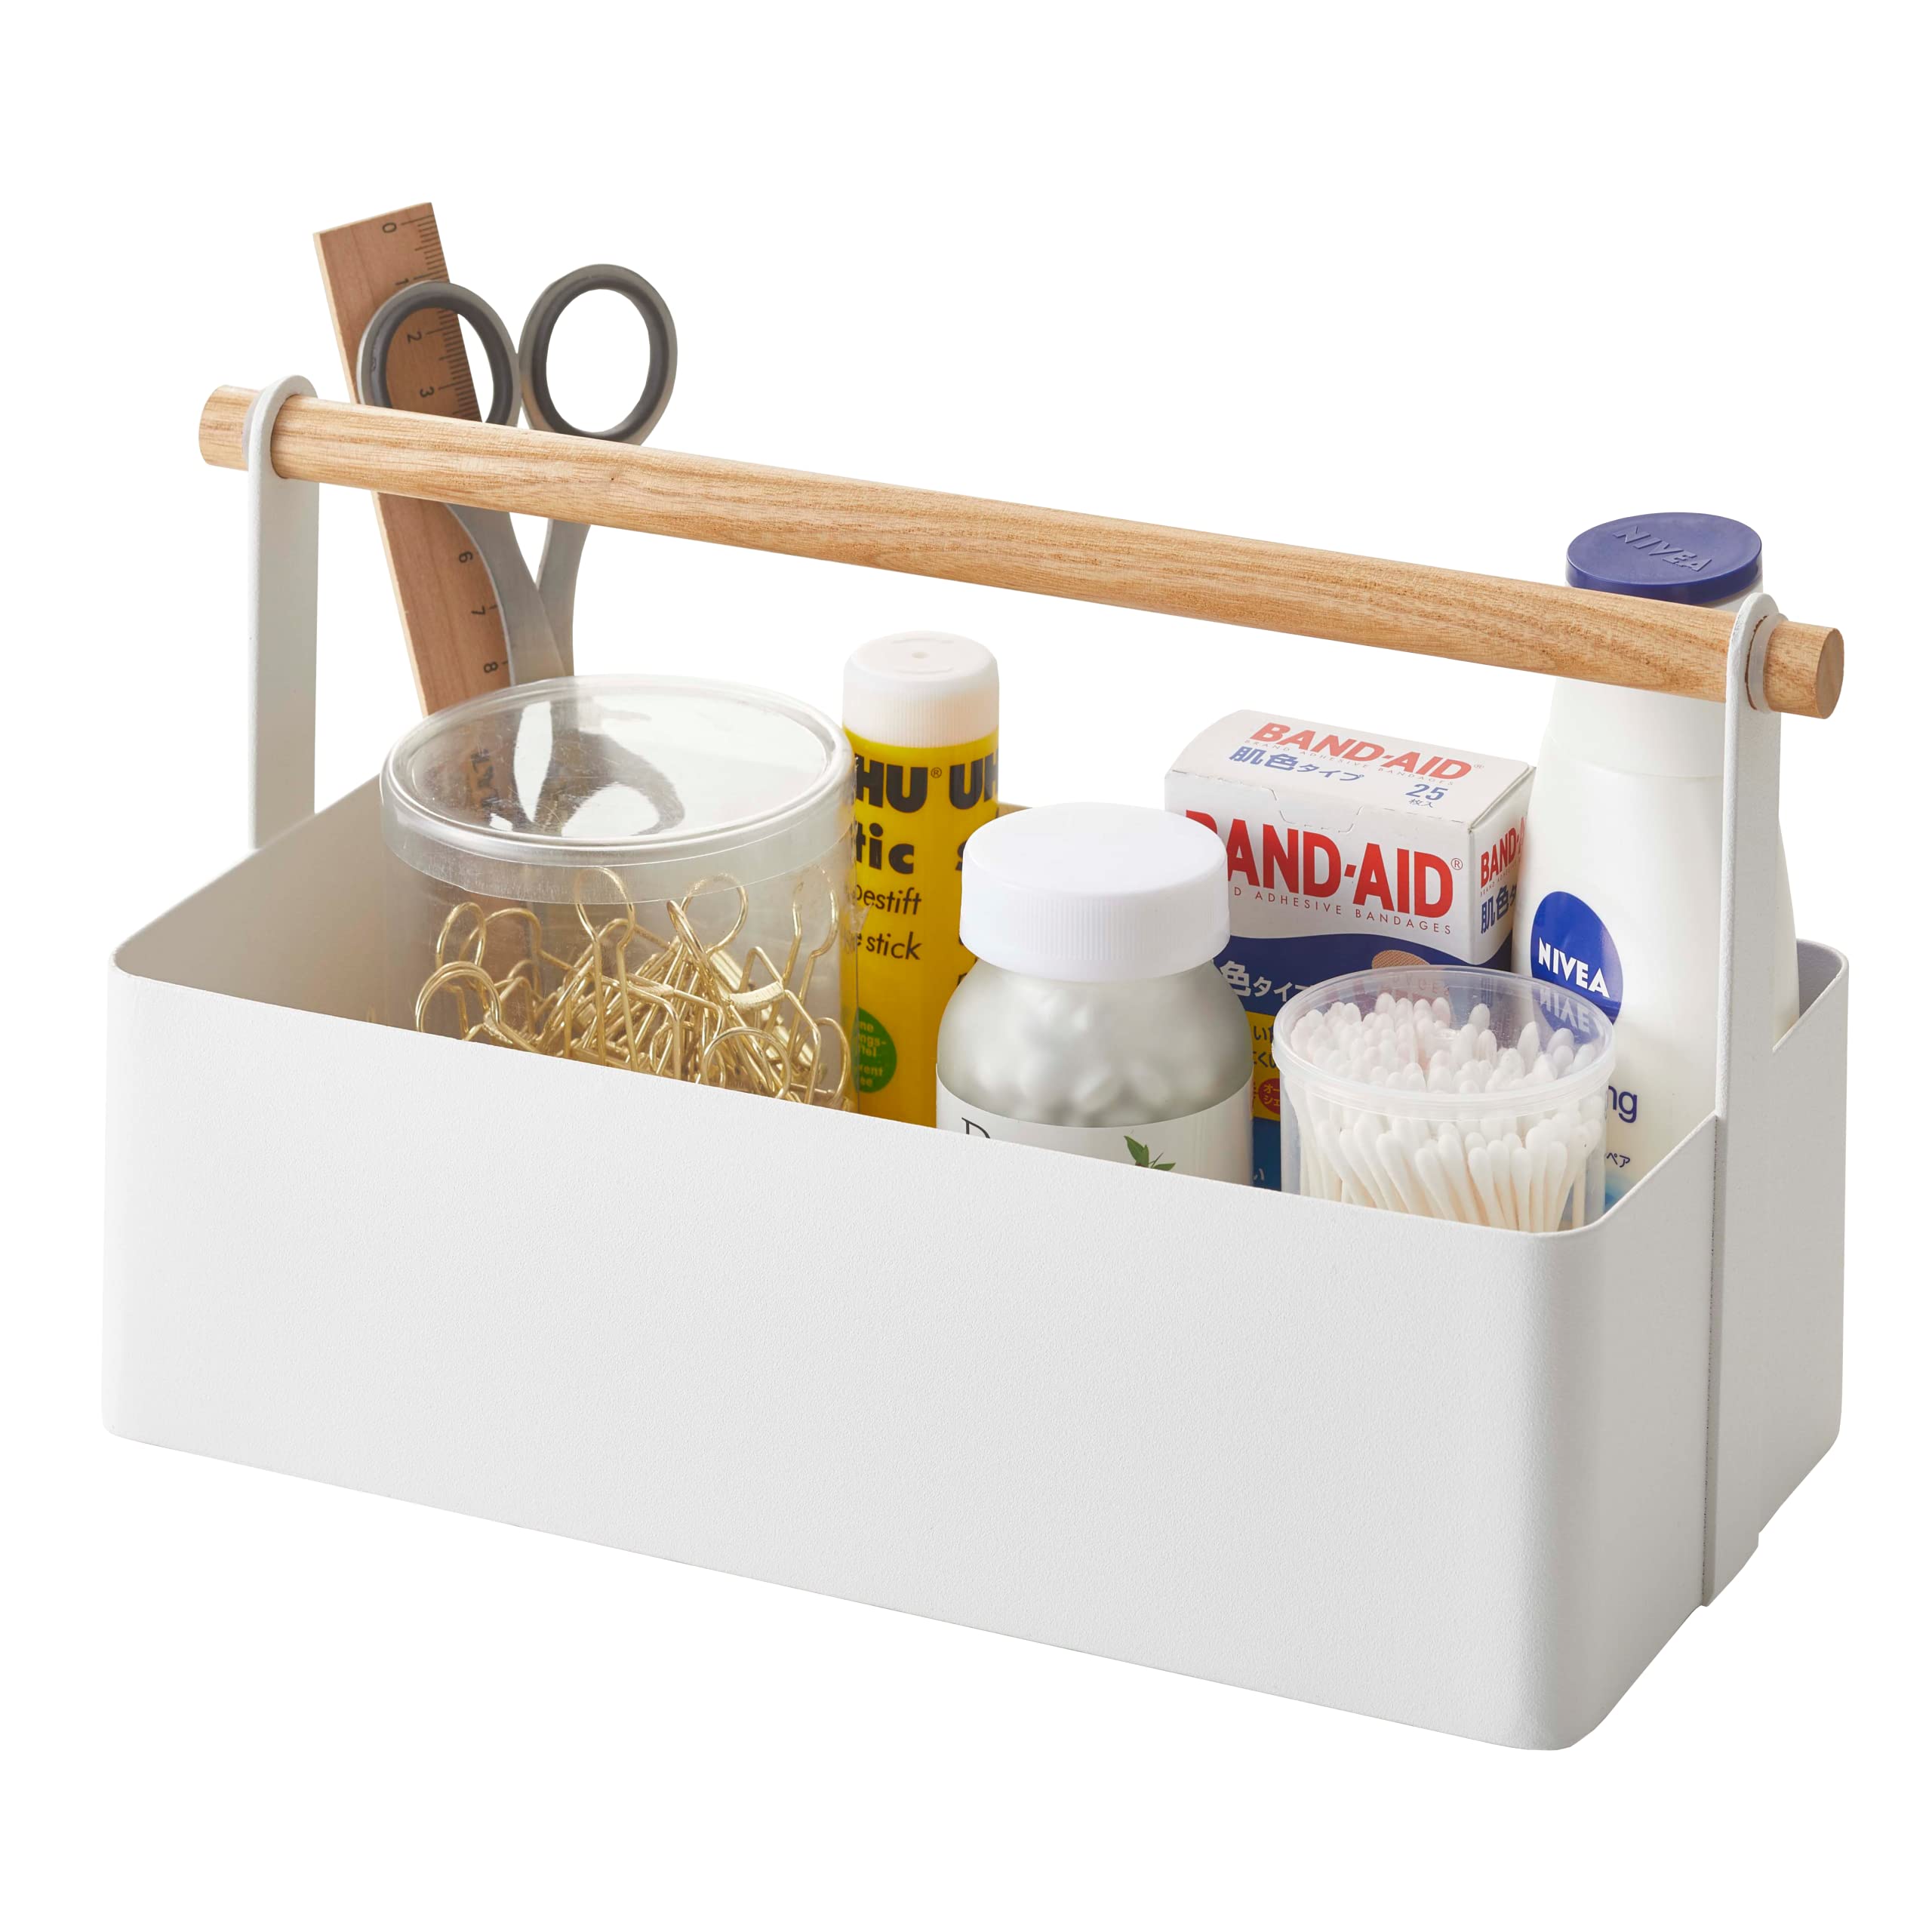 Yamazaki Caddy Home Storage Handle Organizer | Steel + Wood | Large | Baskets and Bins, One Size, White